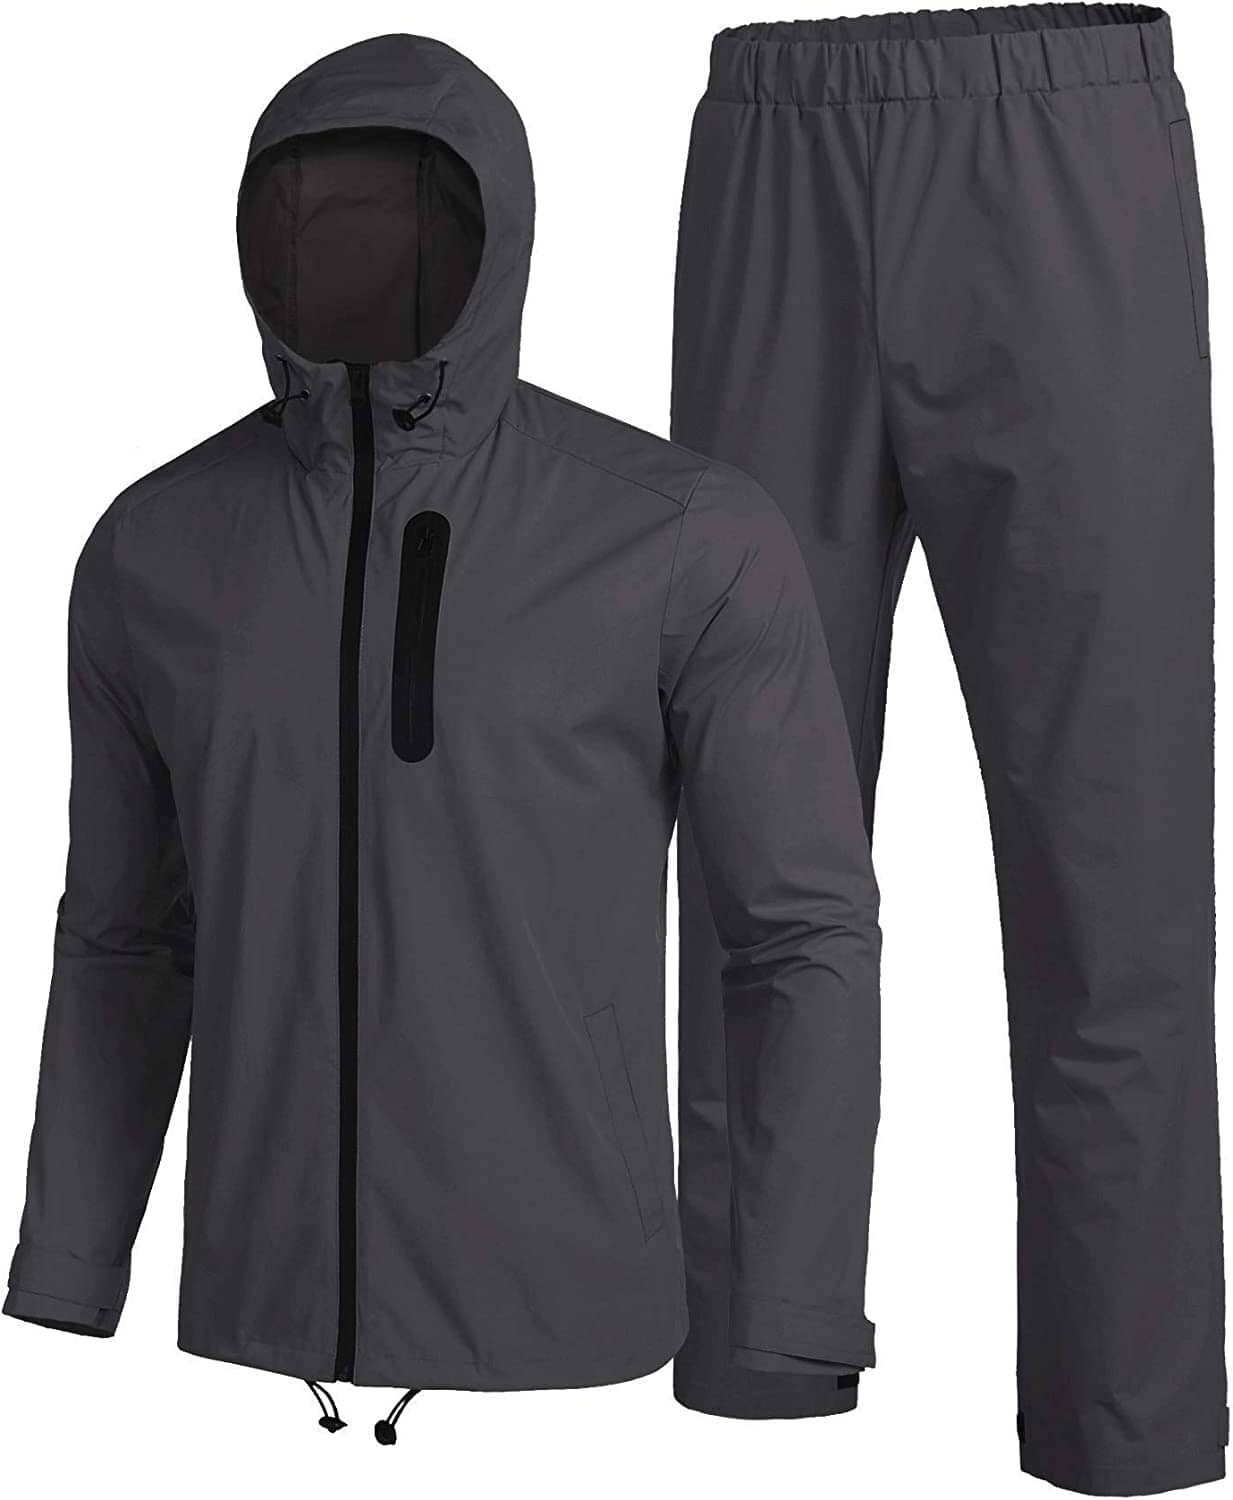 Waterproof Lightweight Camping Rain Suit (US Only) Sports Set COOFANDY Store Dark Grey S 